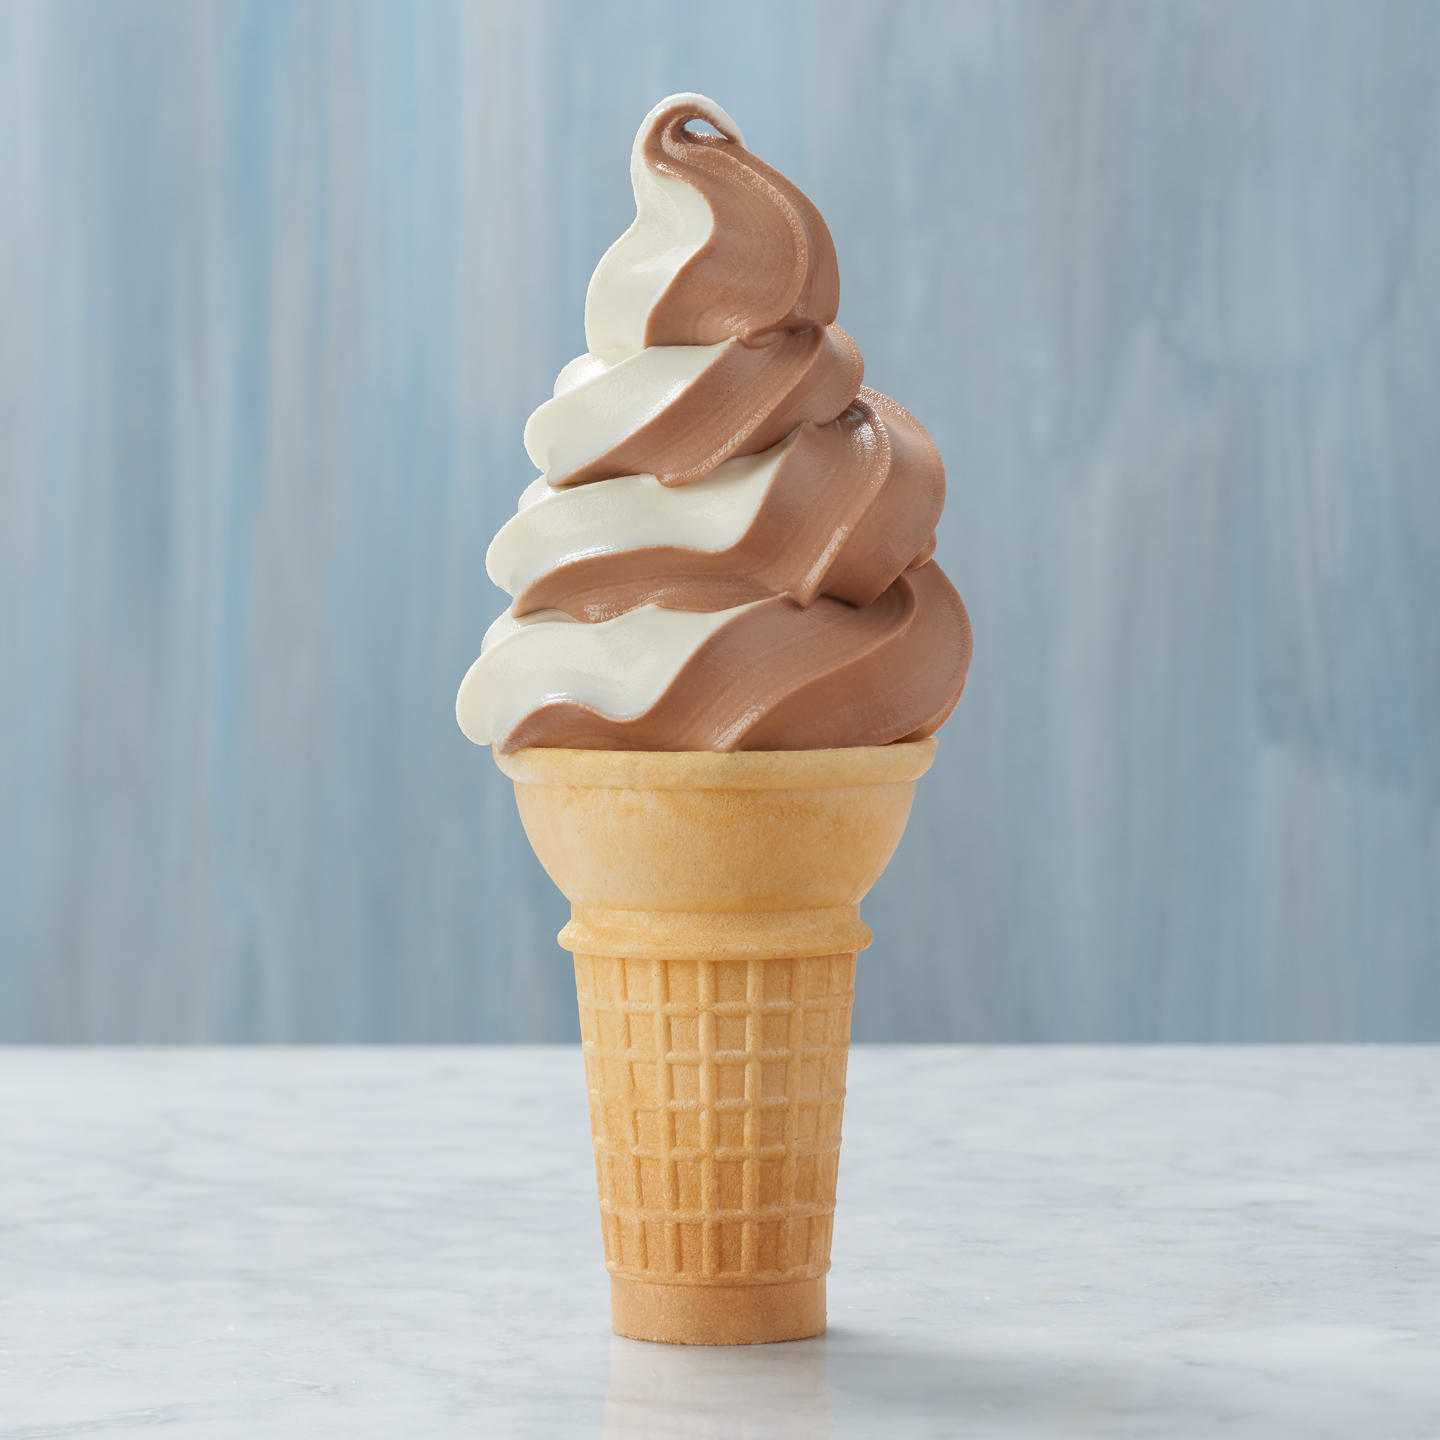 Classic cone filled with chocolate vanilla swirl soft-serve ice cream.